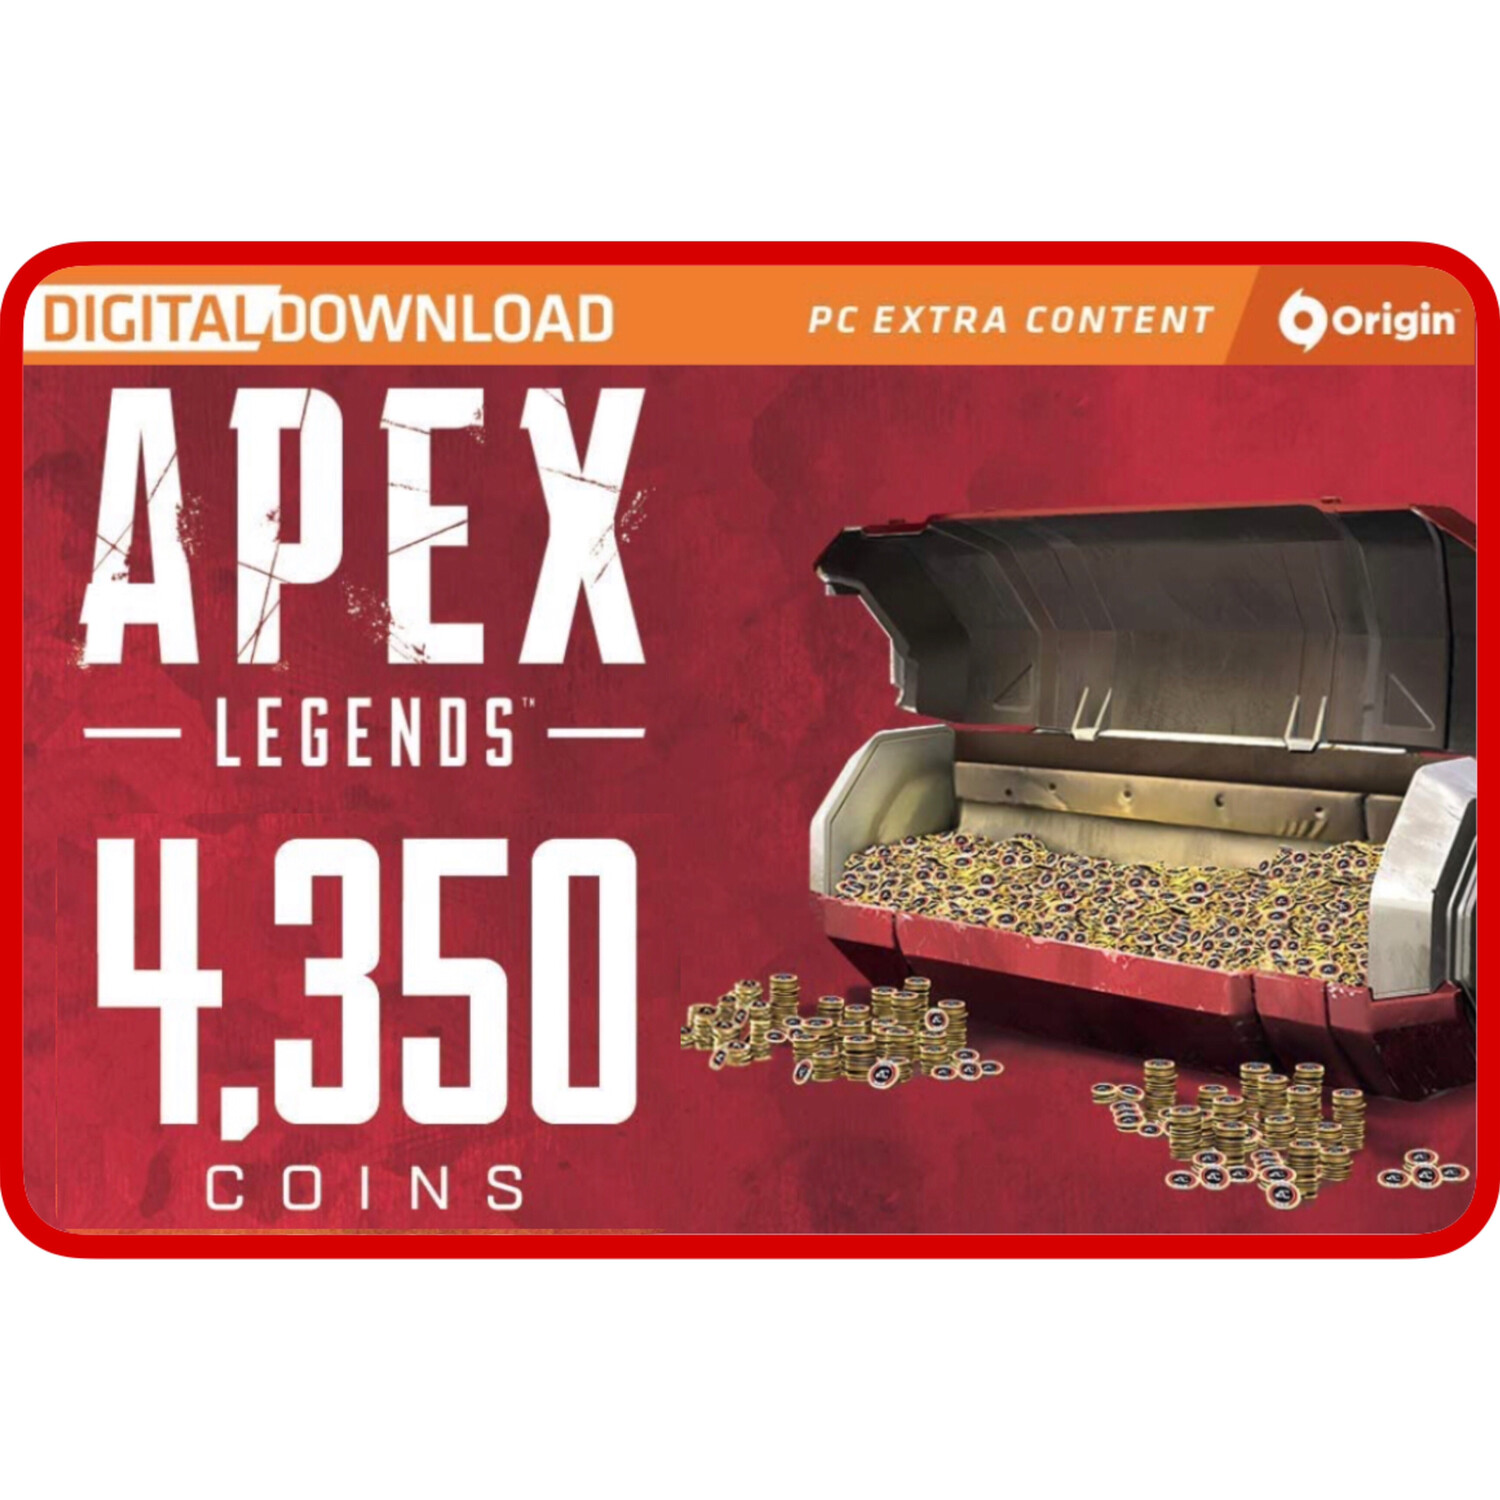 4350 Apex Coins Origins for PC